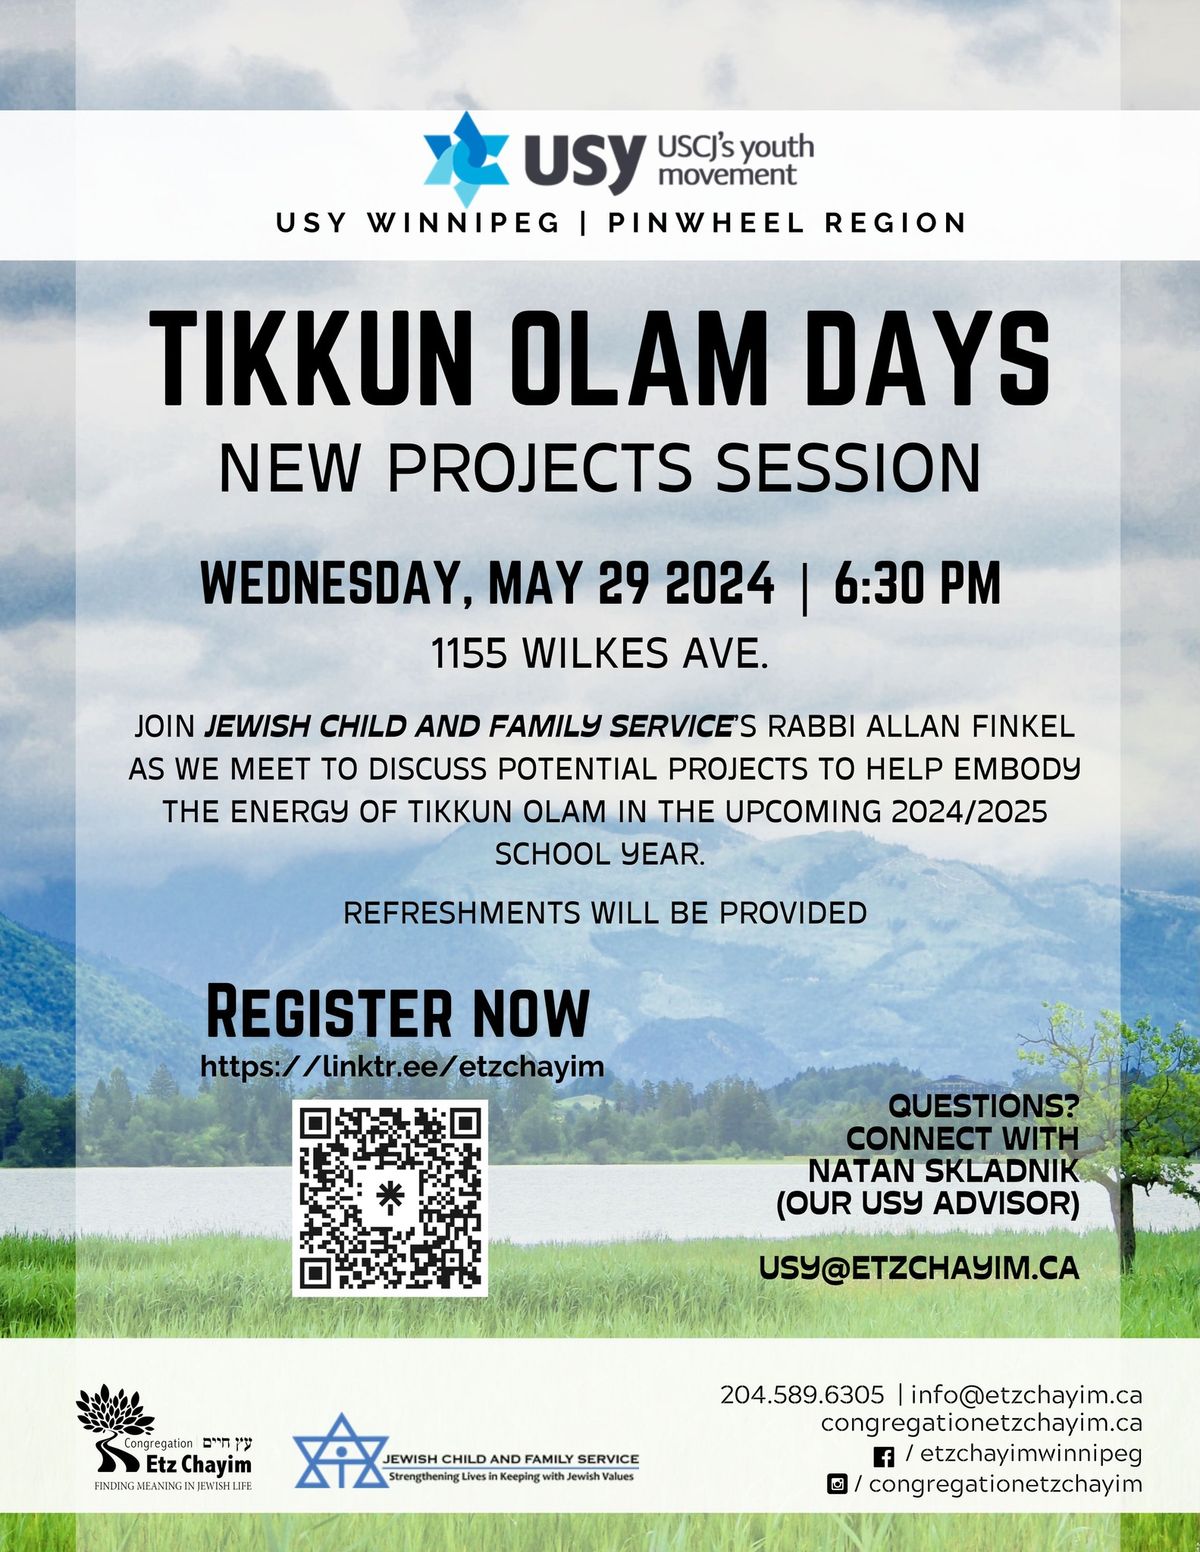 Tikkun Olam Days - New Projects Session